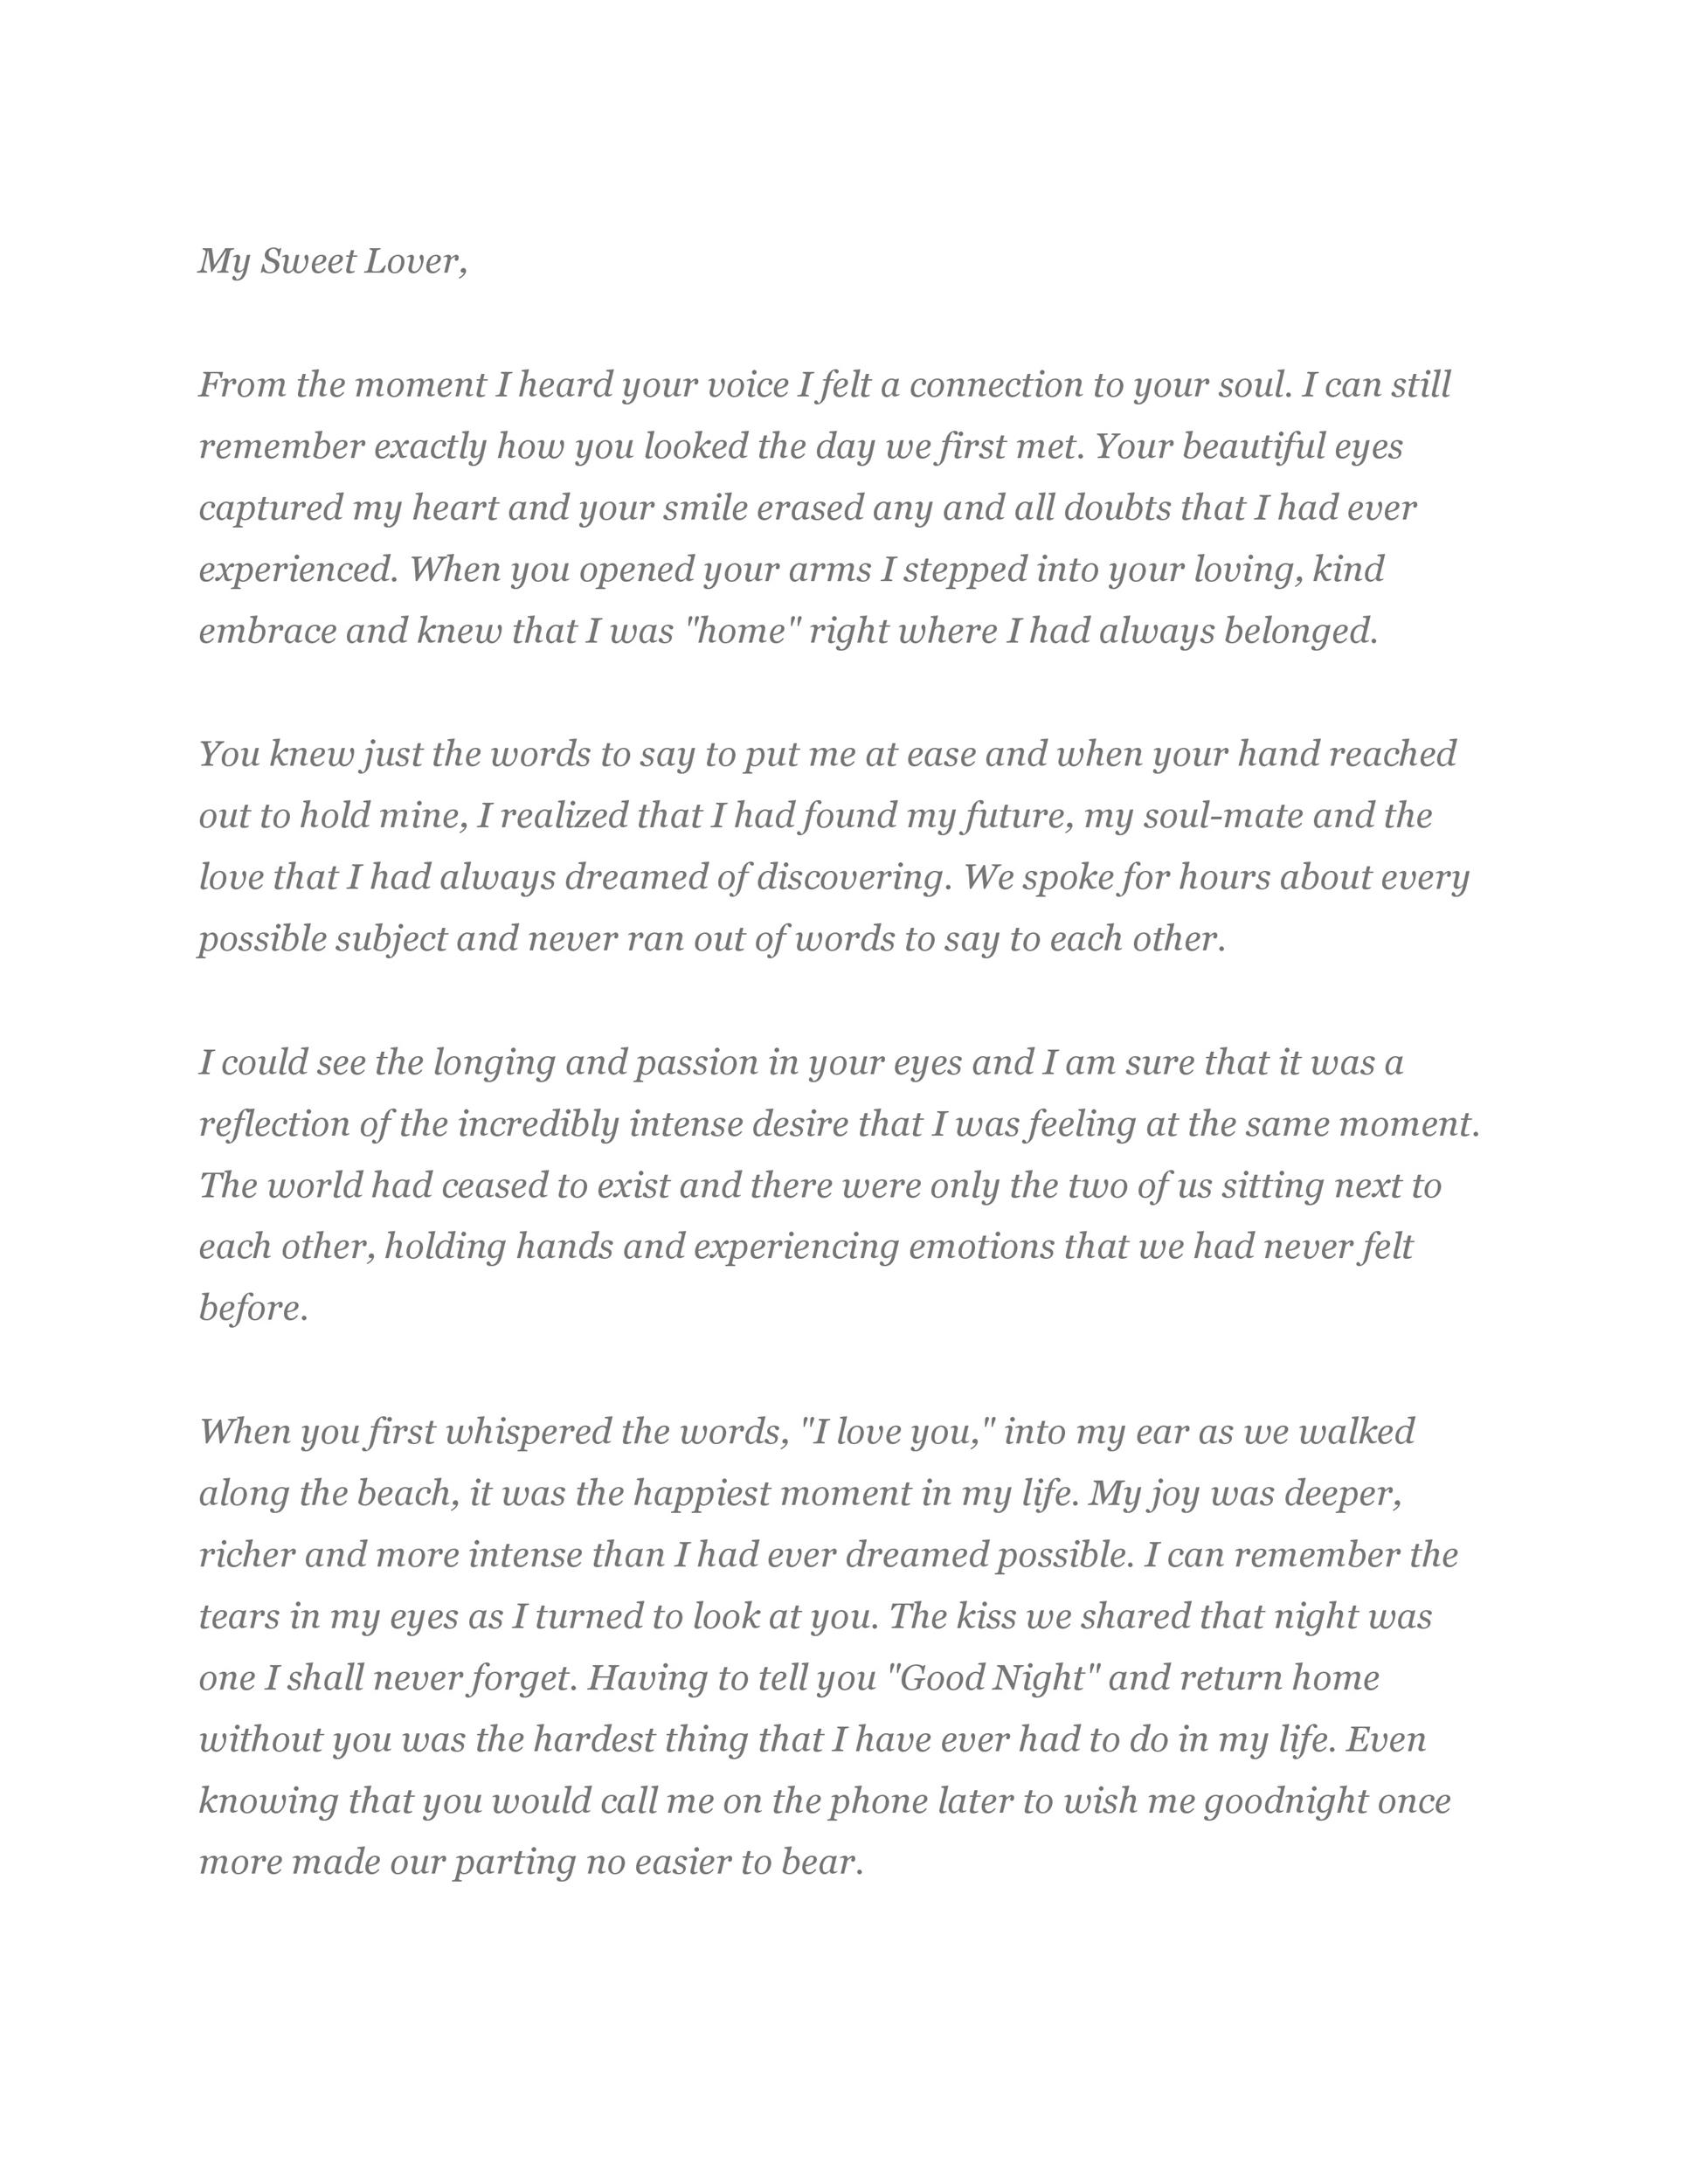 Best Love Letter Ever Written from templatelab.com